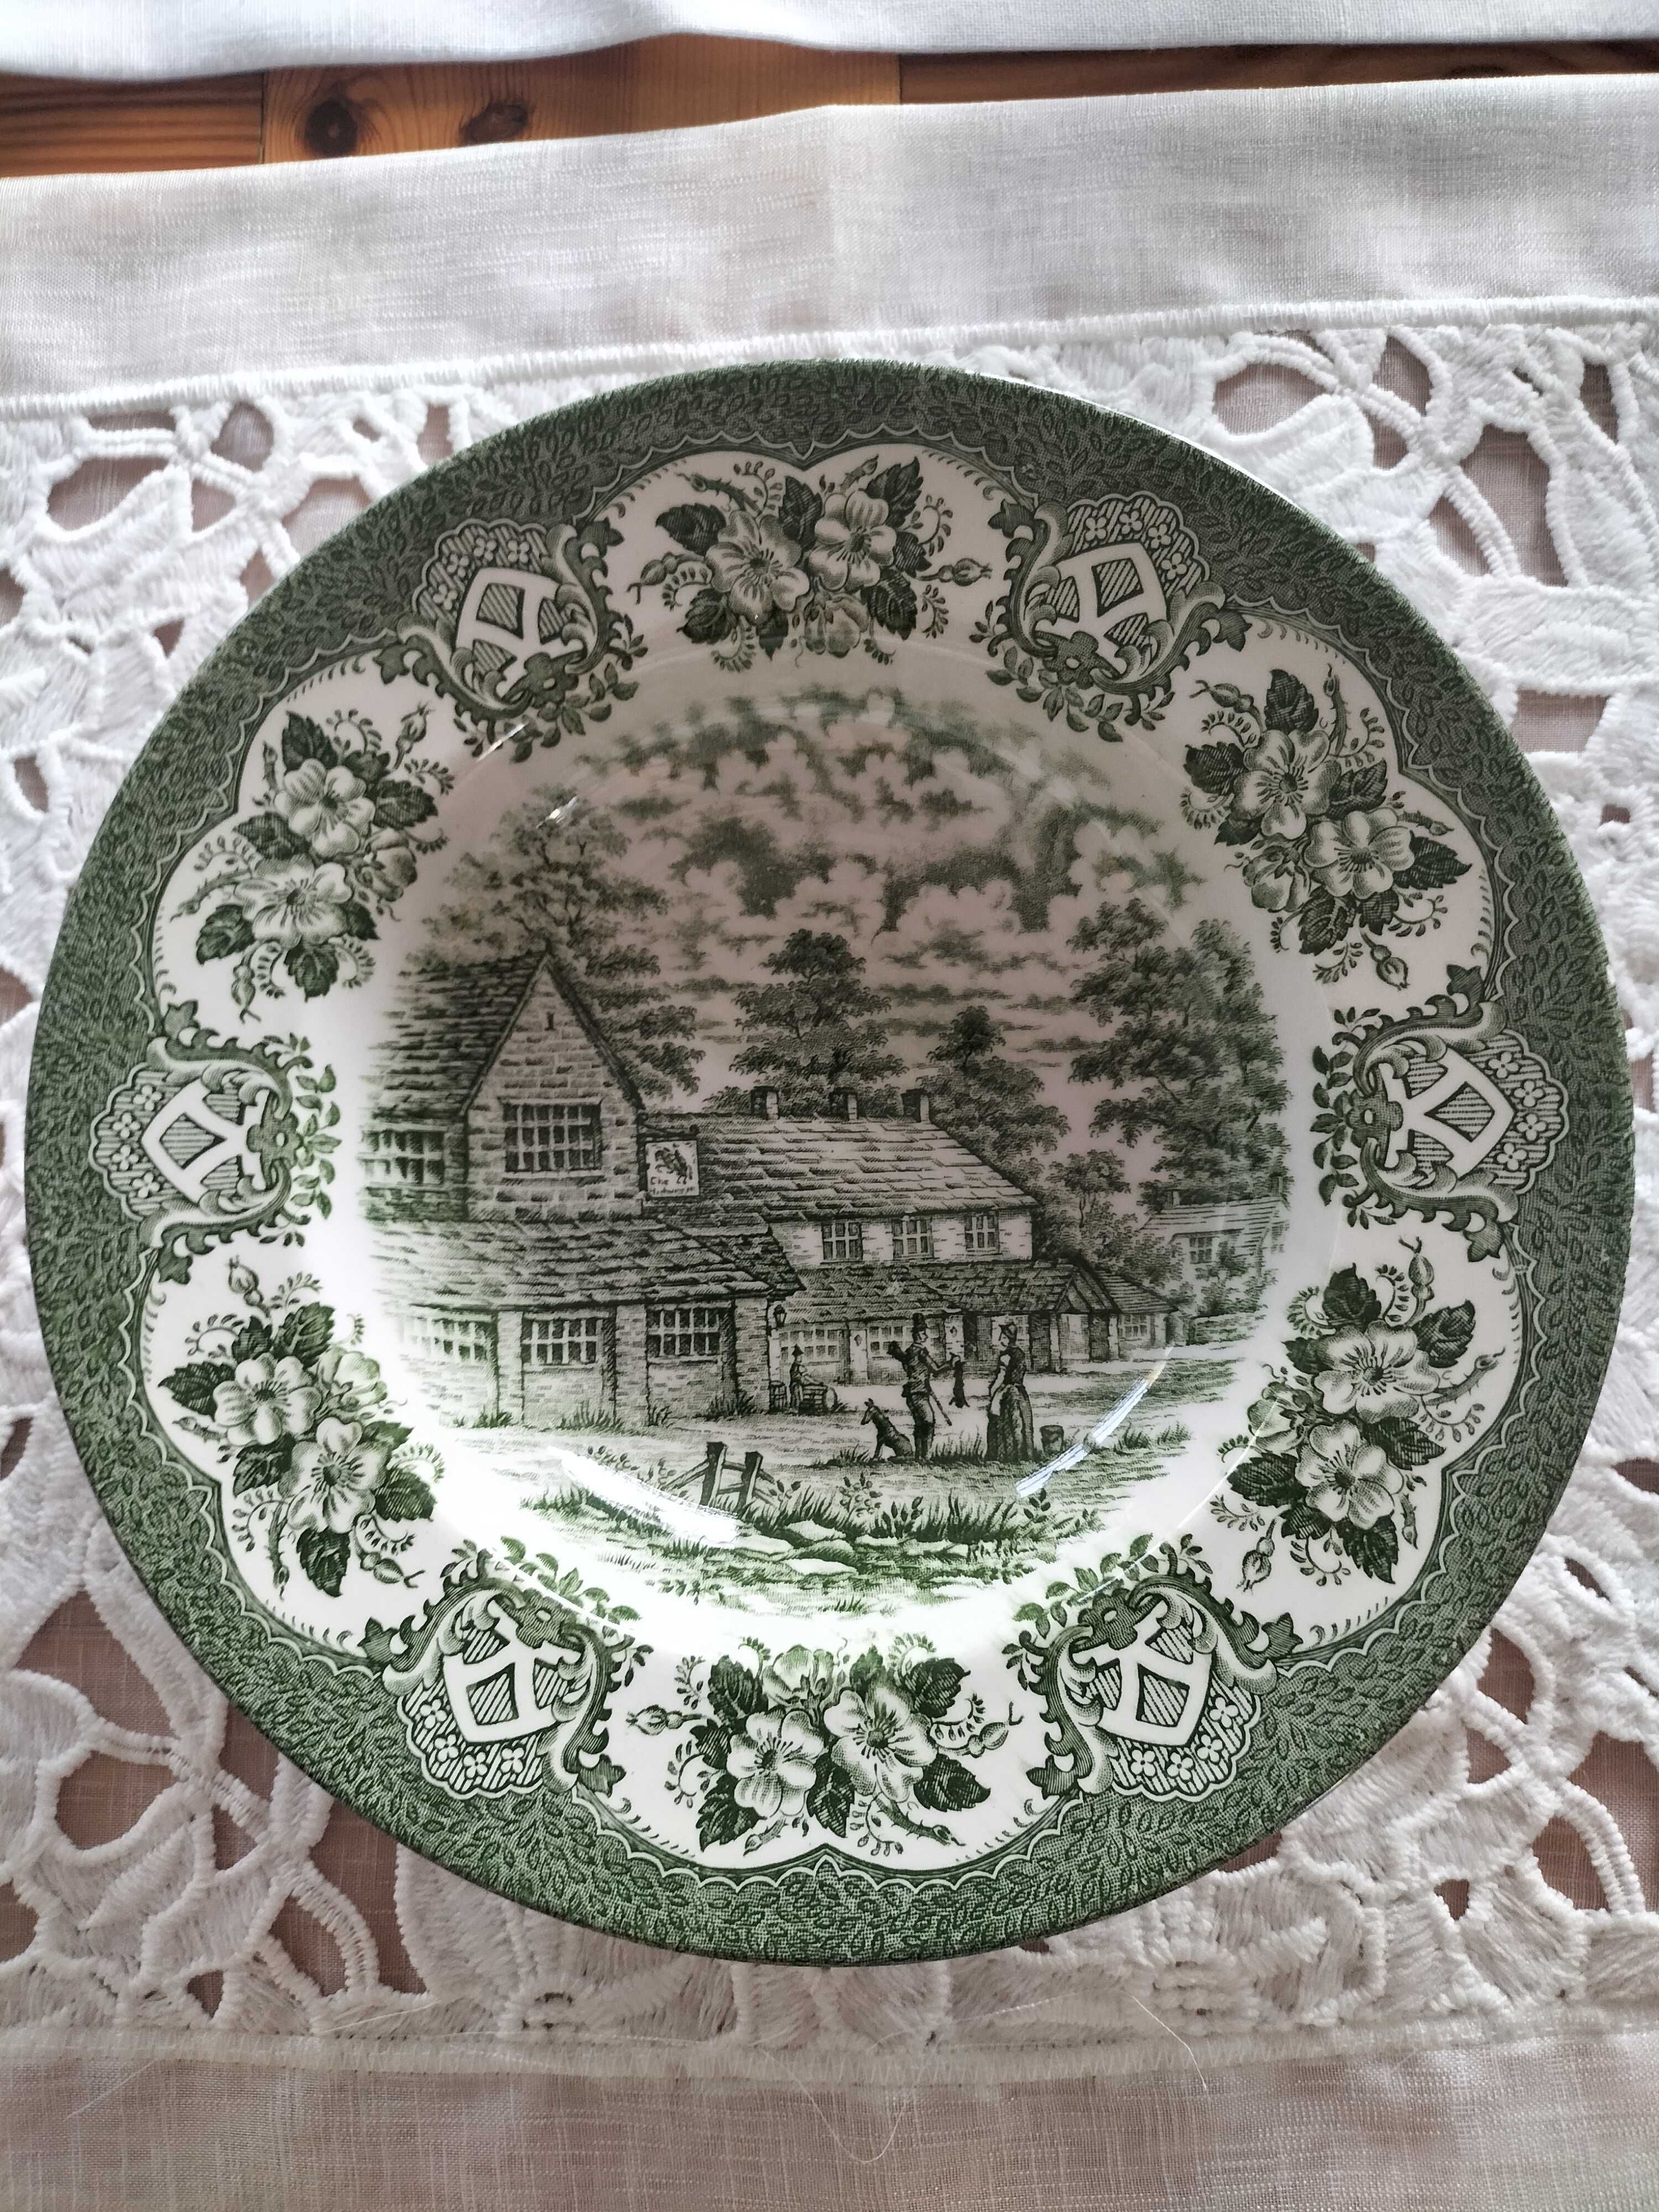 Angielska porcelana zielona- Staffordshire Ironstone 7 szt.